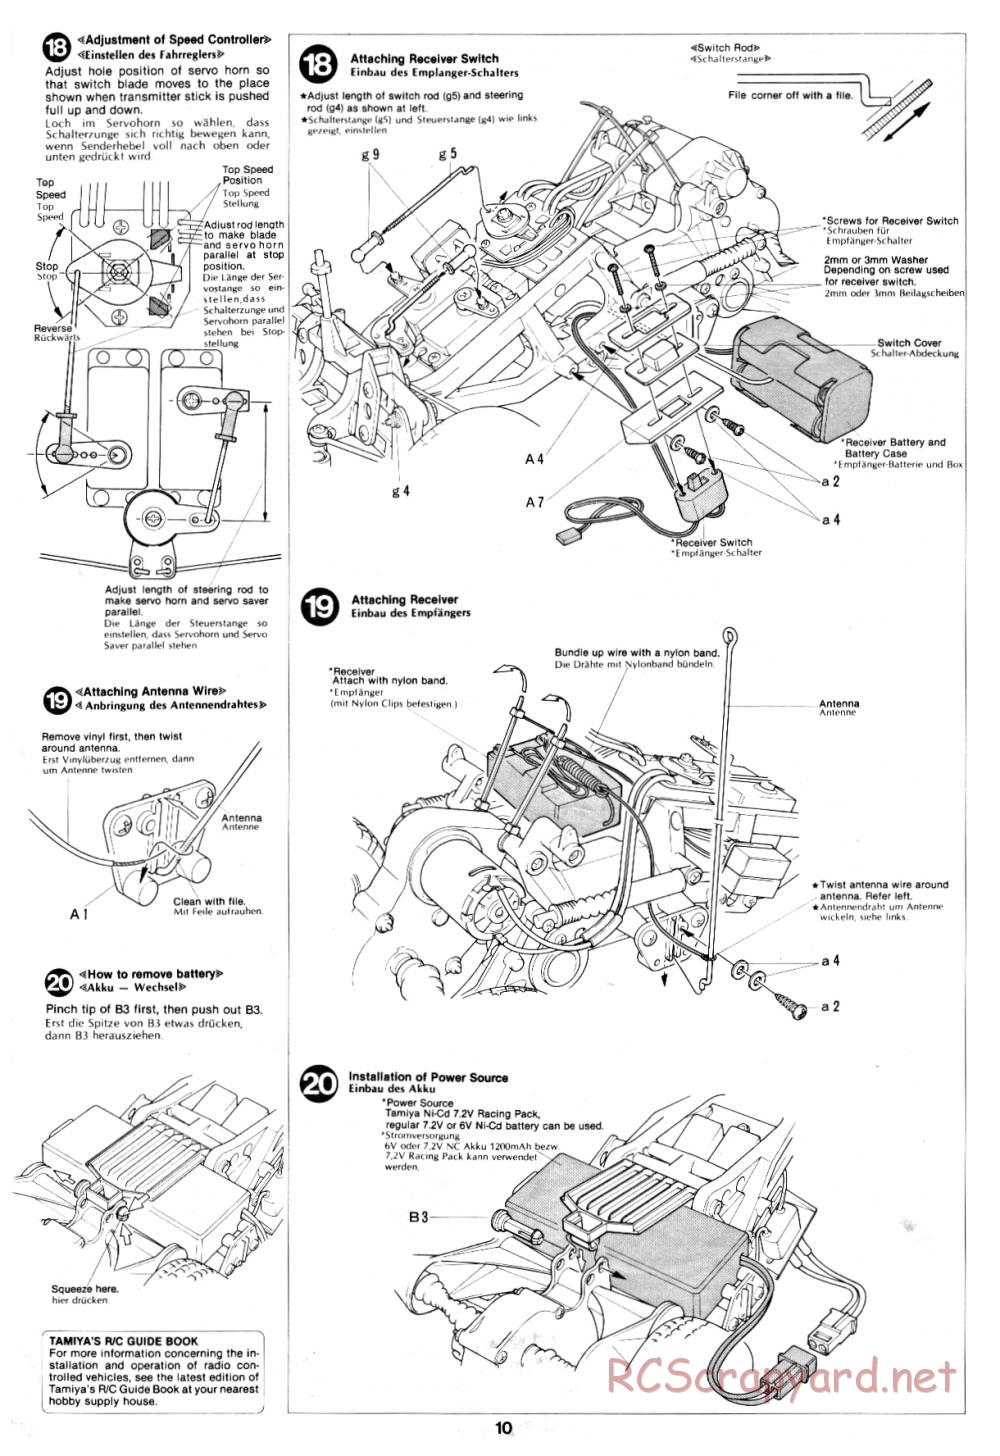 Tamiya - Subaru Brat - 58038 - Manual - Page 10